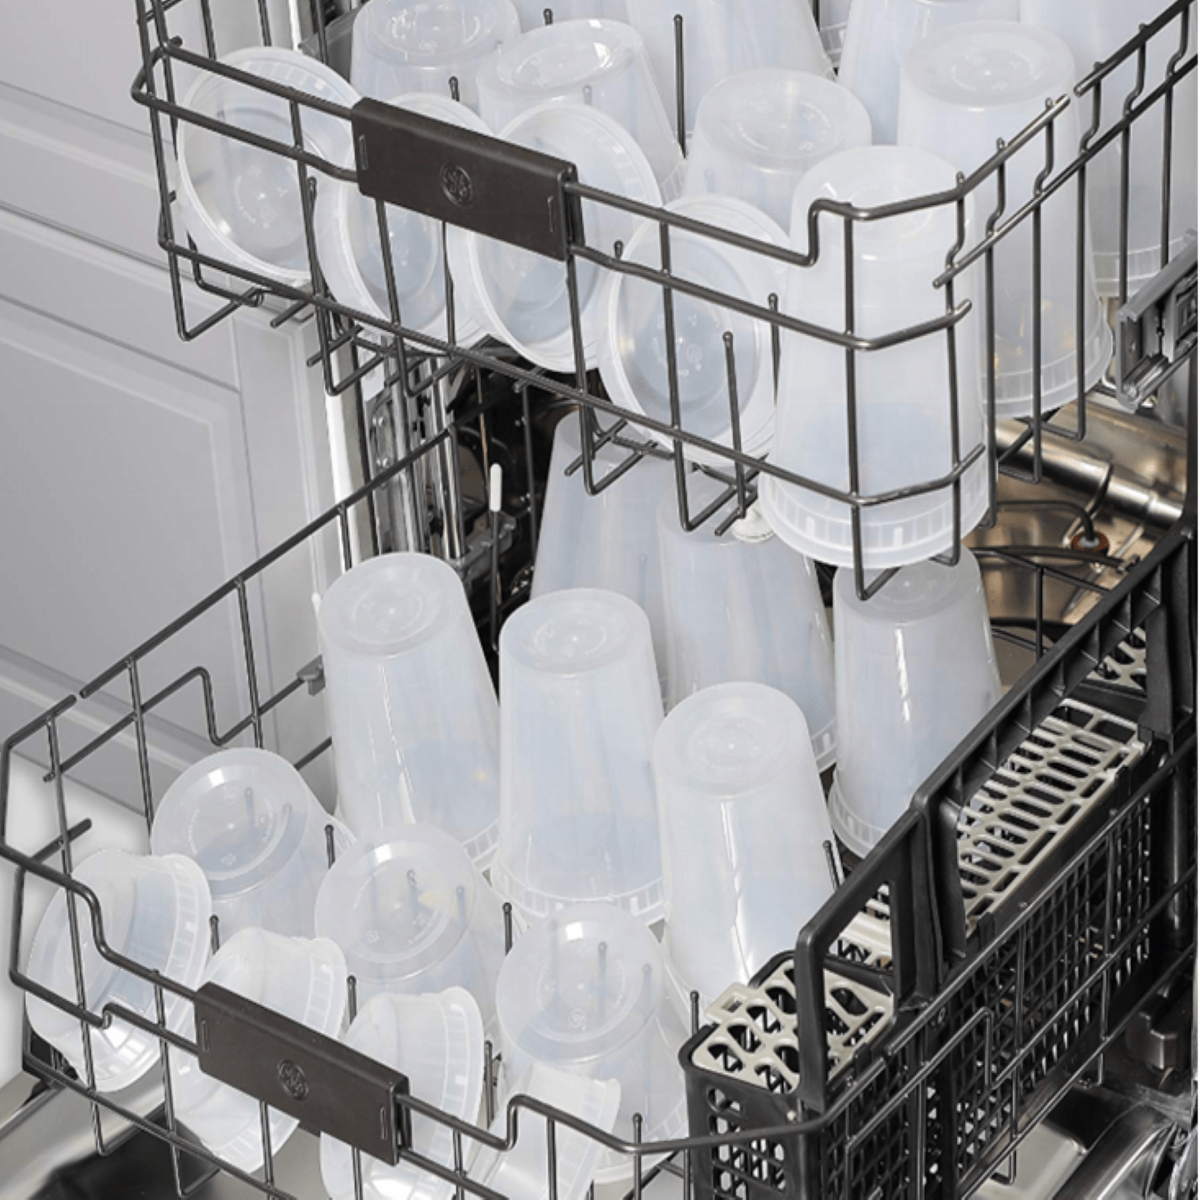 EDI [32 OZ, 40 Sets] Plastic Deli Food Storage Containers with